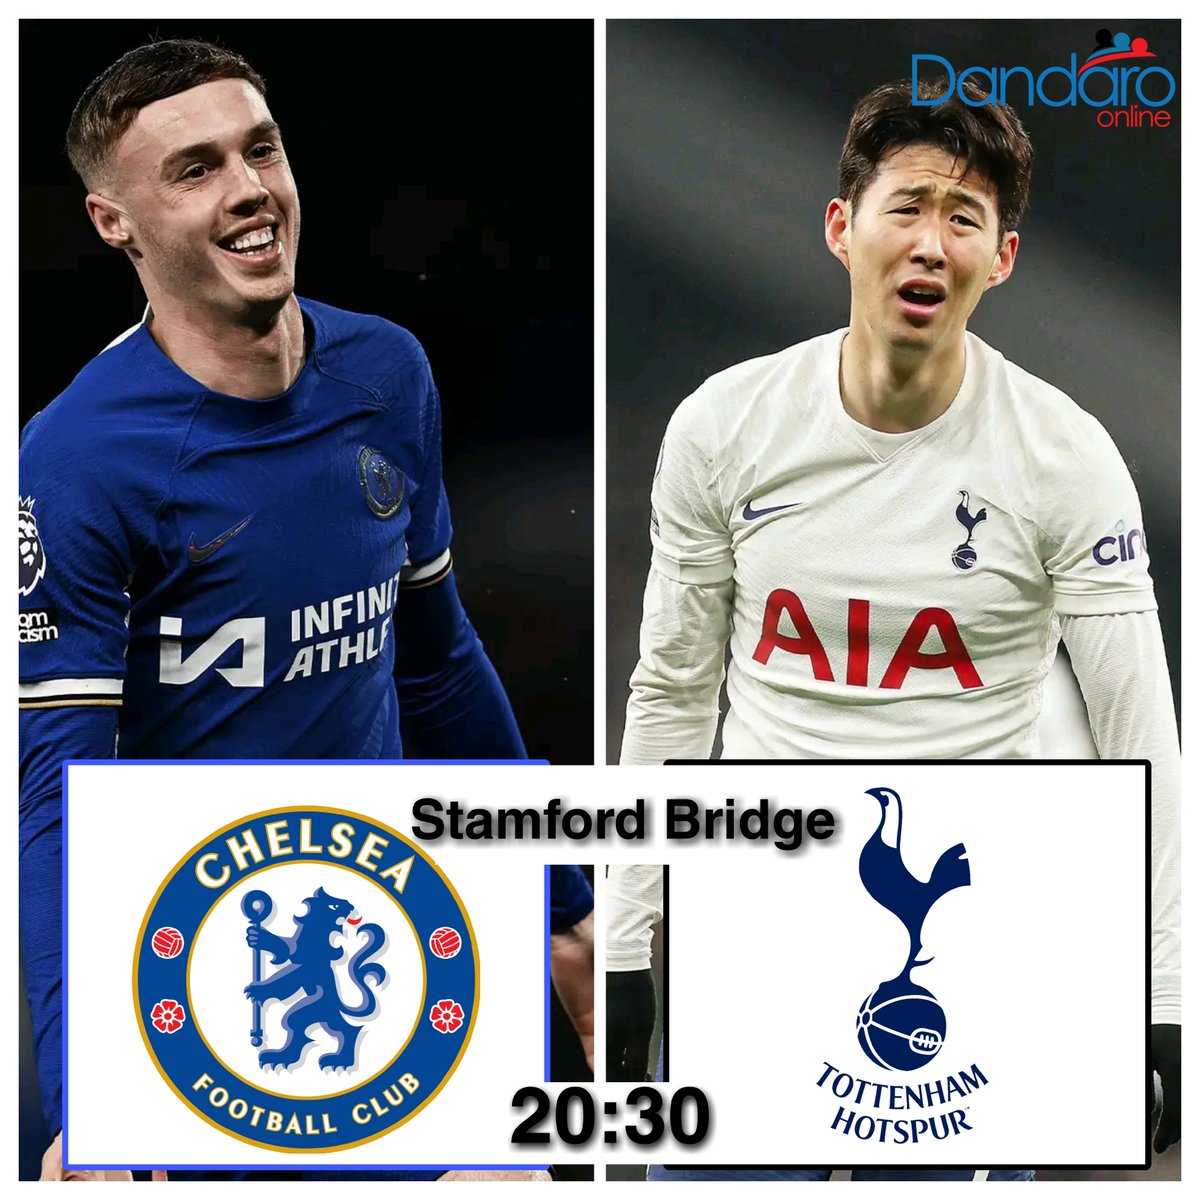 #dandarosports London Derby tonight, Chelsea vs Tottenham Hotspur. Drop your predictions...⚽🔥💯✔️